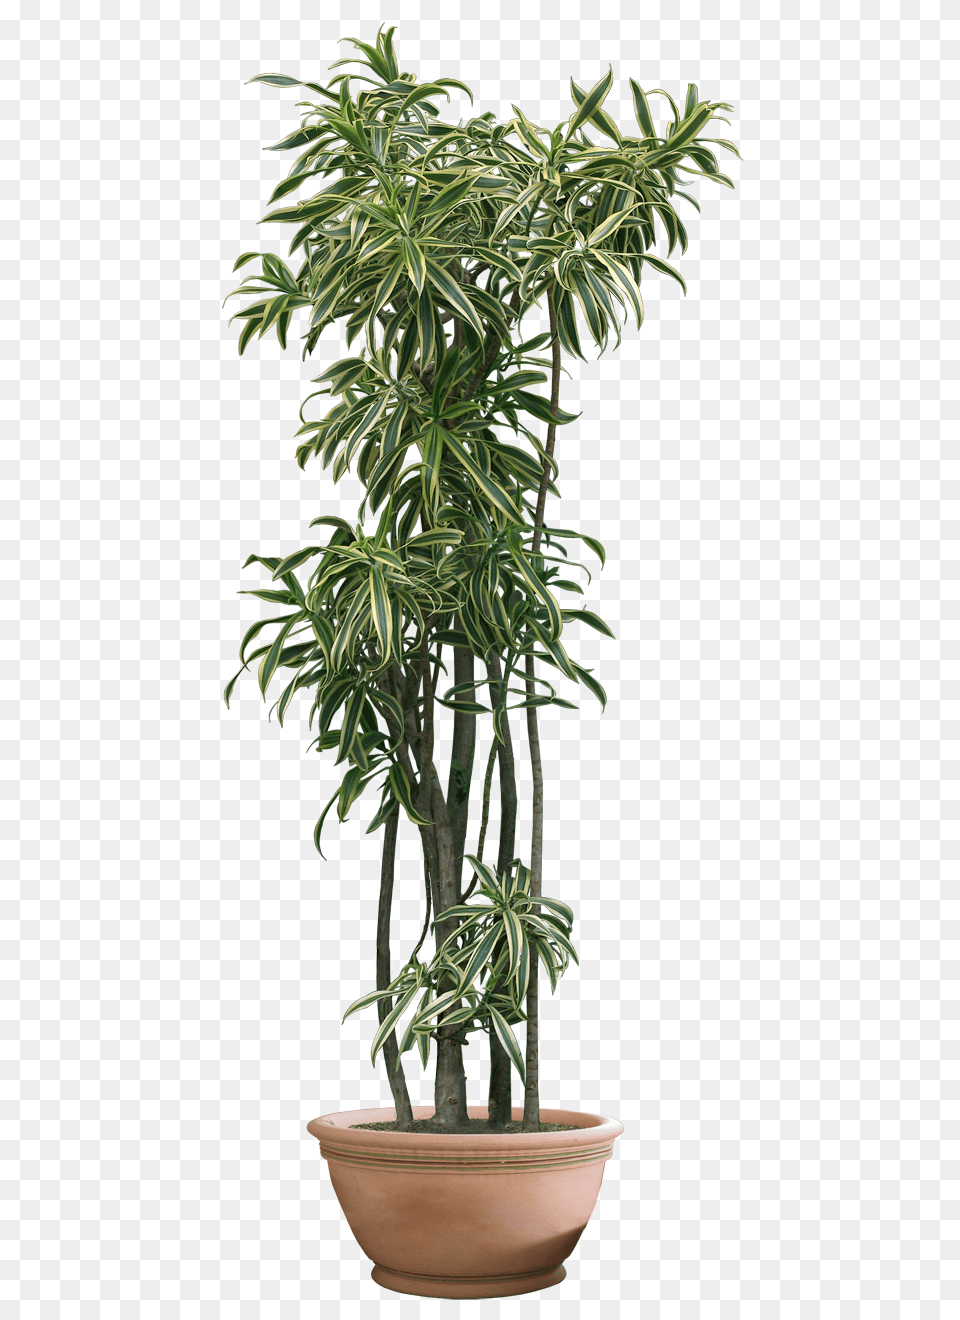 Transparent Pictures Indoor Plant Transparent Background, Potted Plant, Tree, Palm Tree, Leaf Png